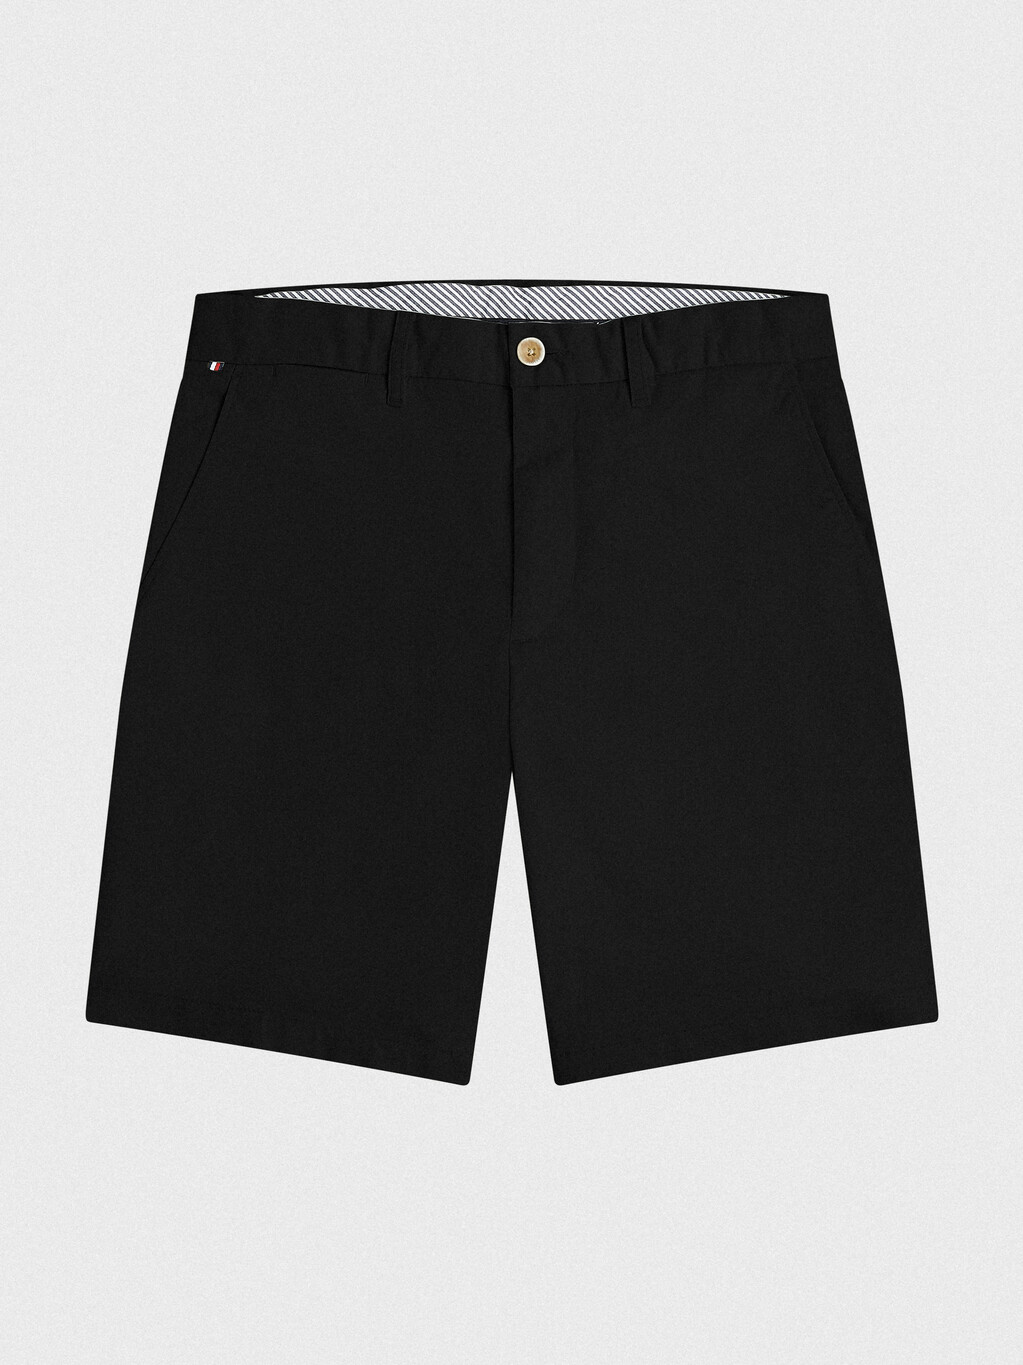 1985 Collection Brooklyn Twill Shorts, Black, hi-res